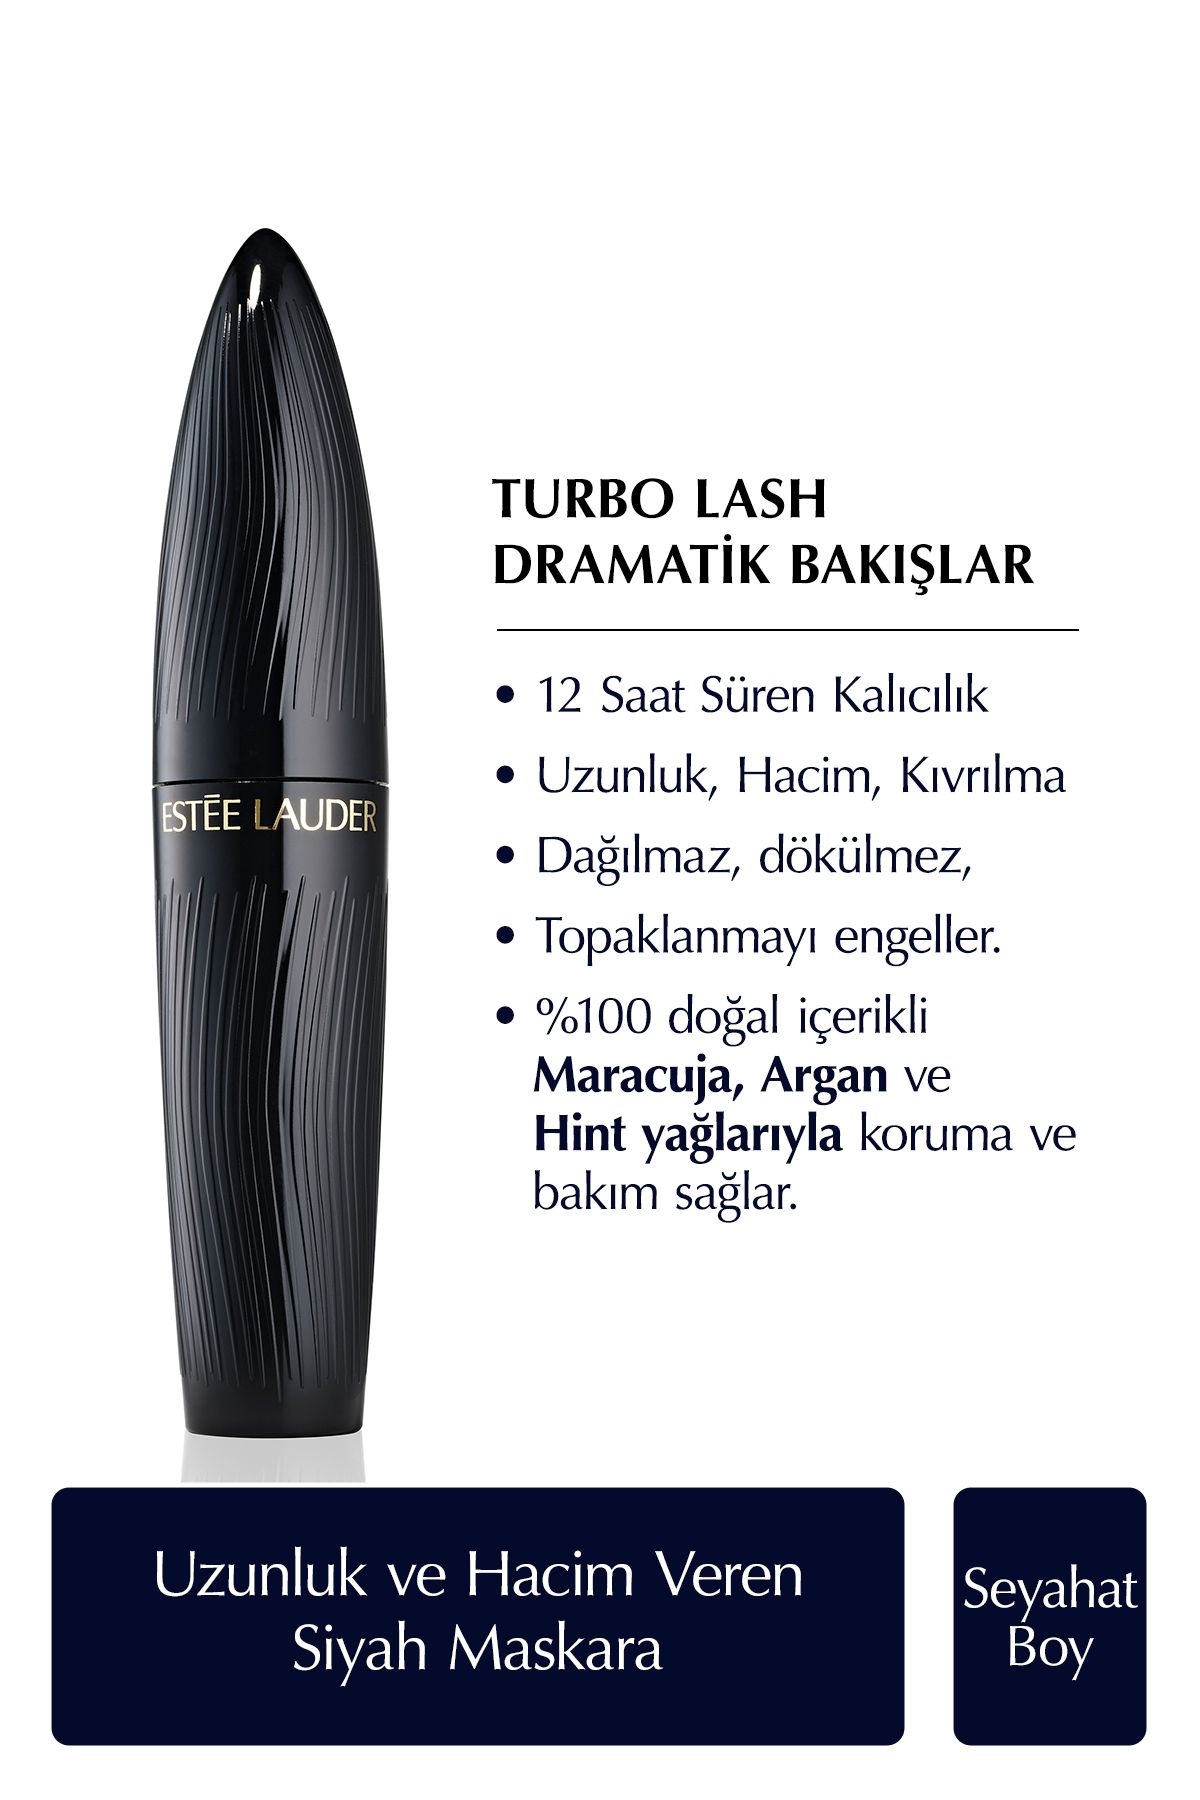 Estee Lauder Travel Size Black Mascara - Turbo Lash Volume and Length Mascara  Colour: Black  3ml GKÜRN684